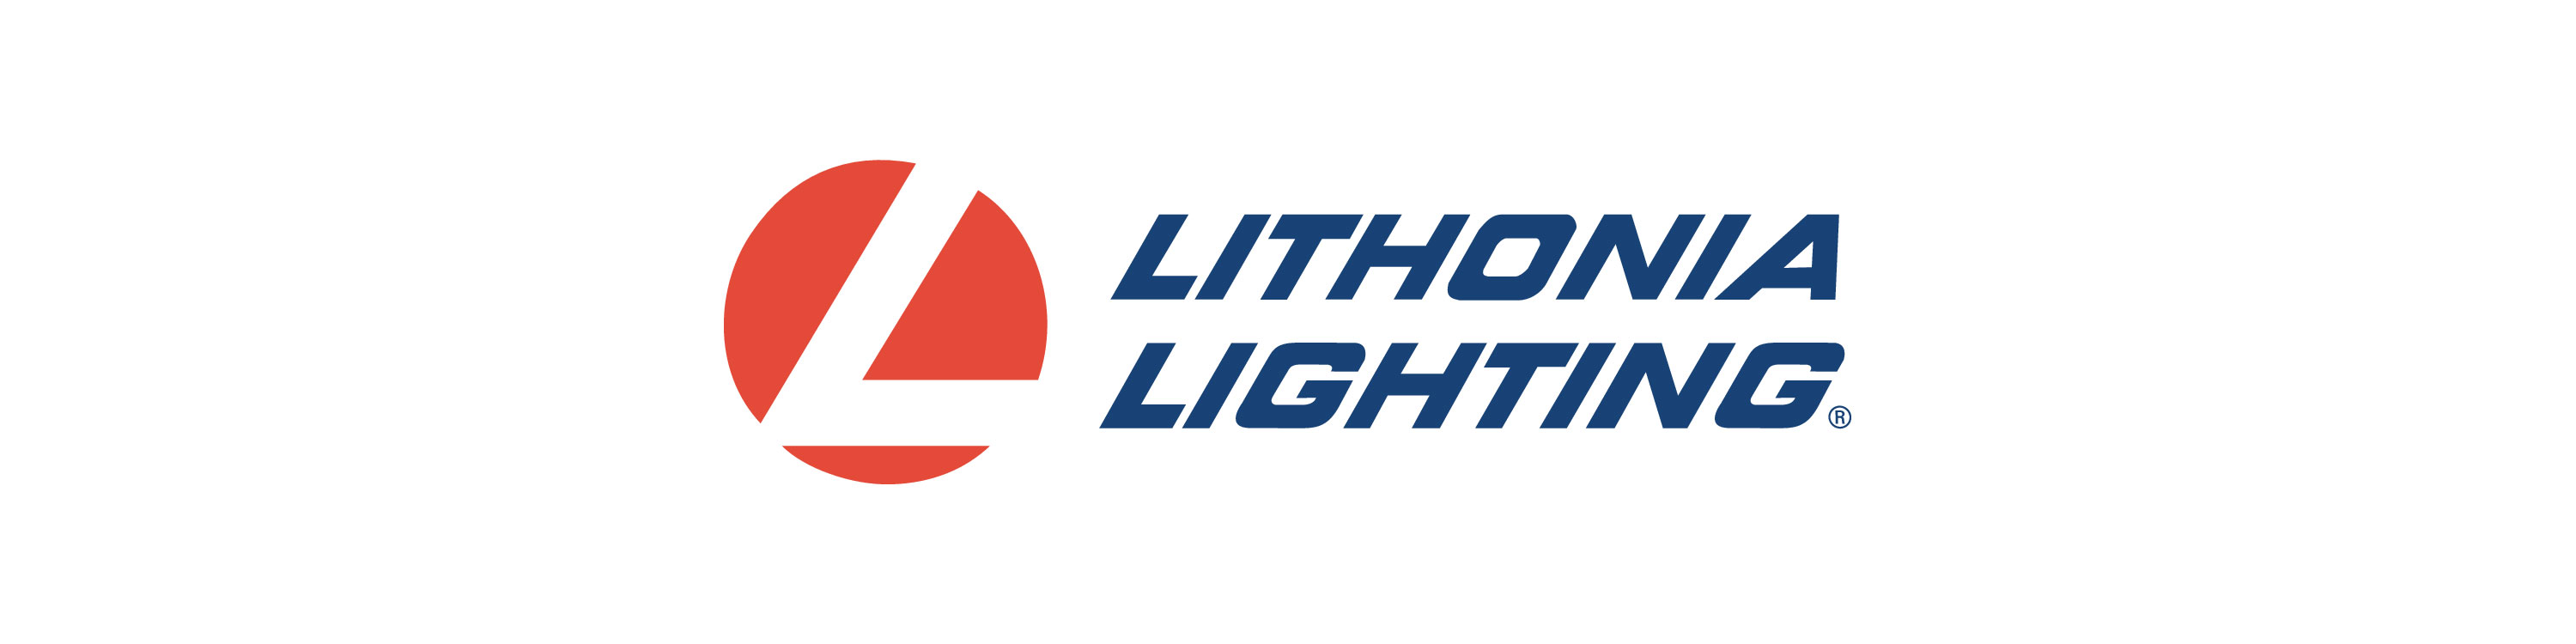 lithonia-lighting-logo-image